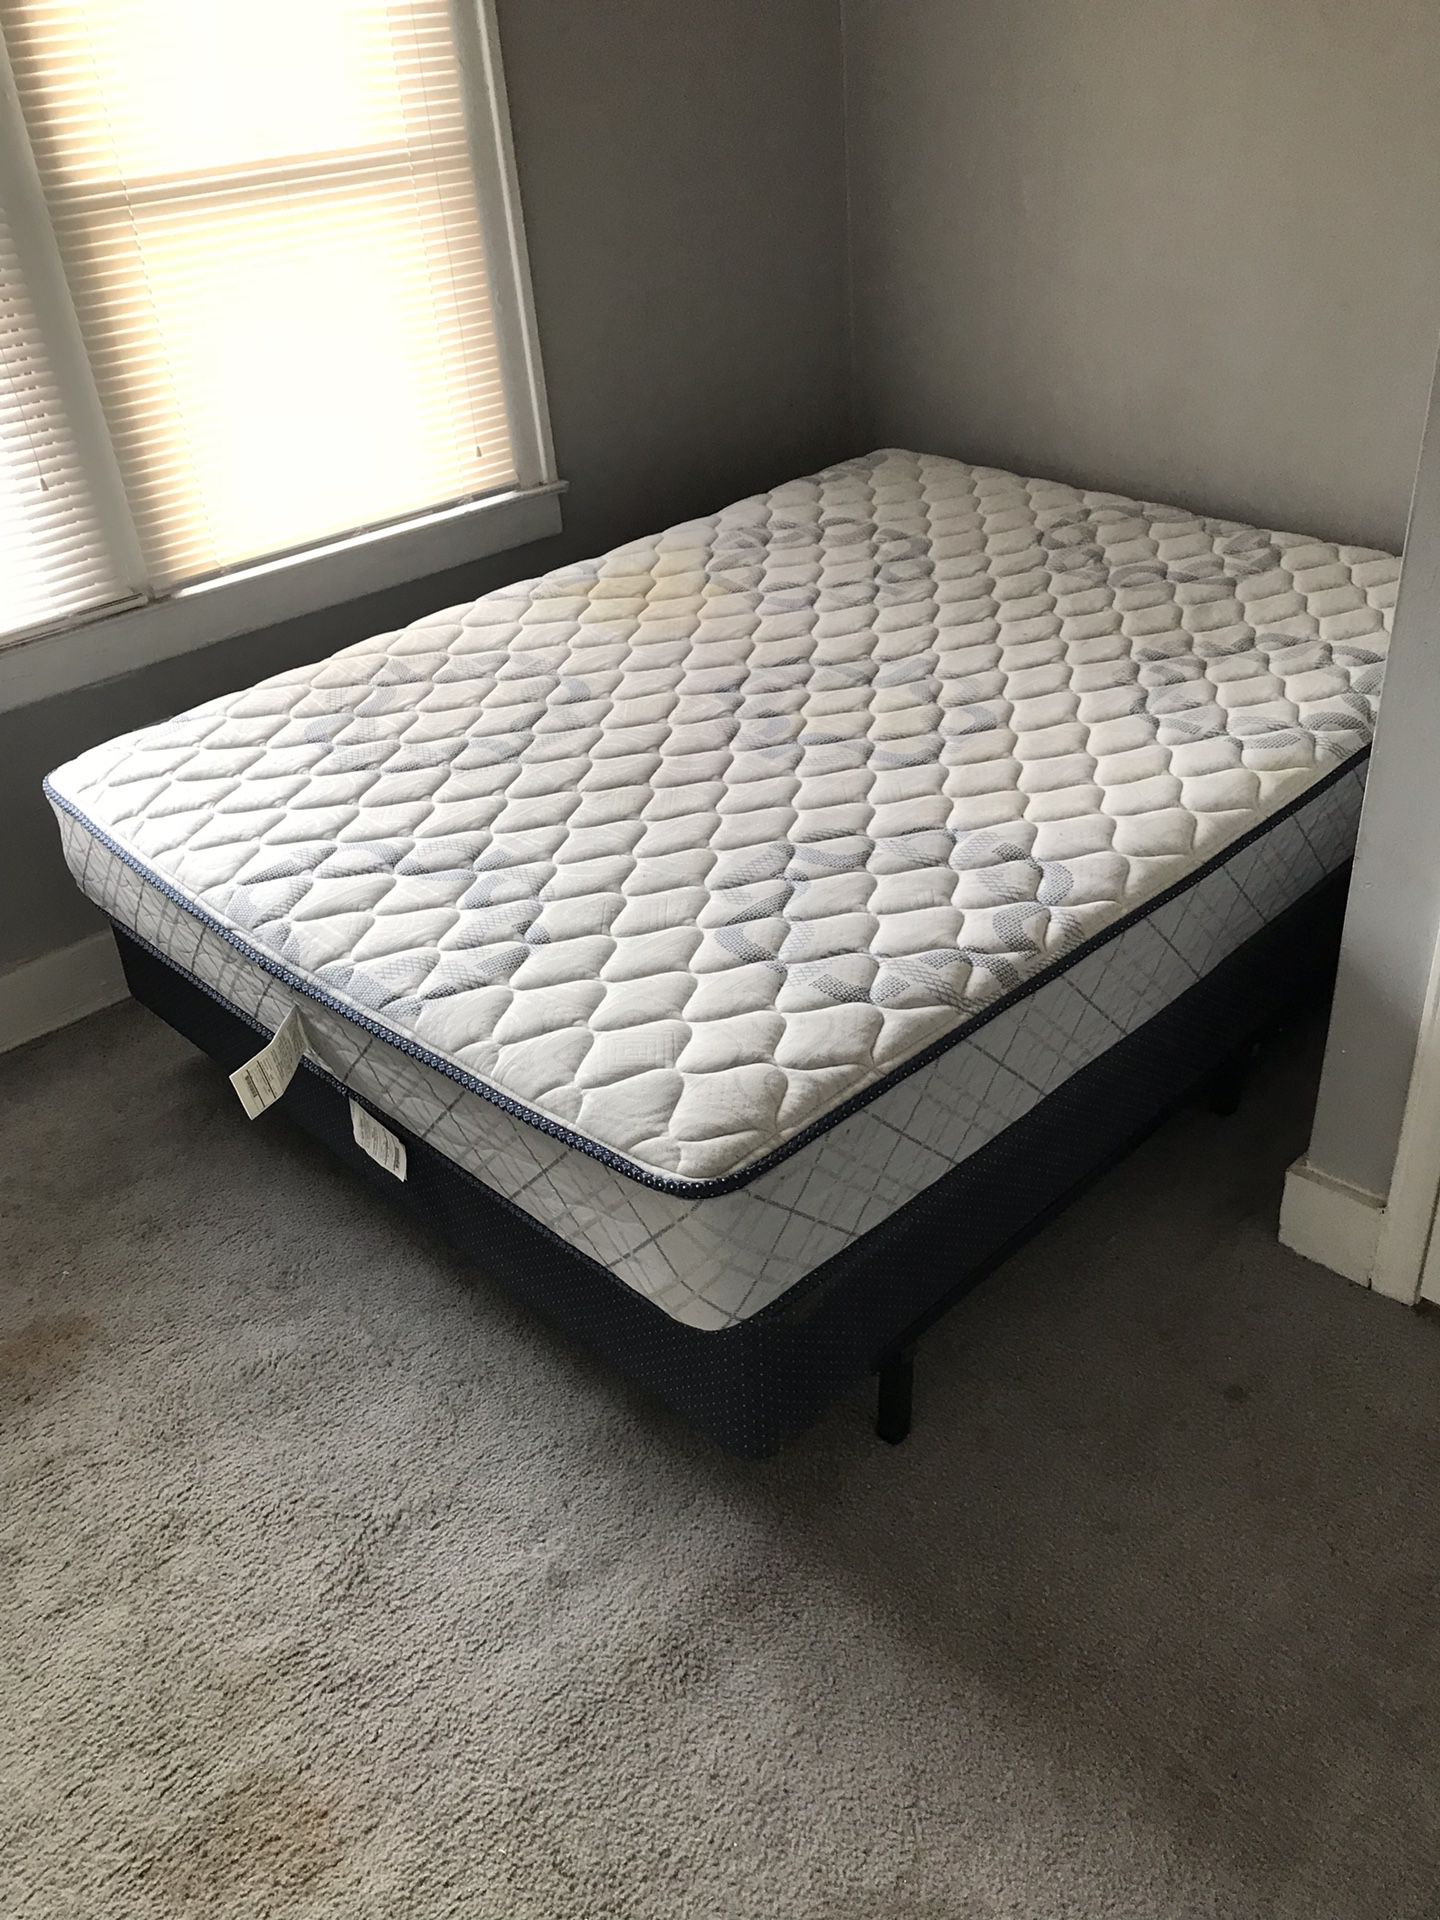 Serta mattress set